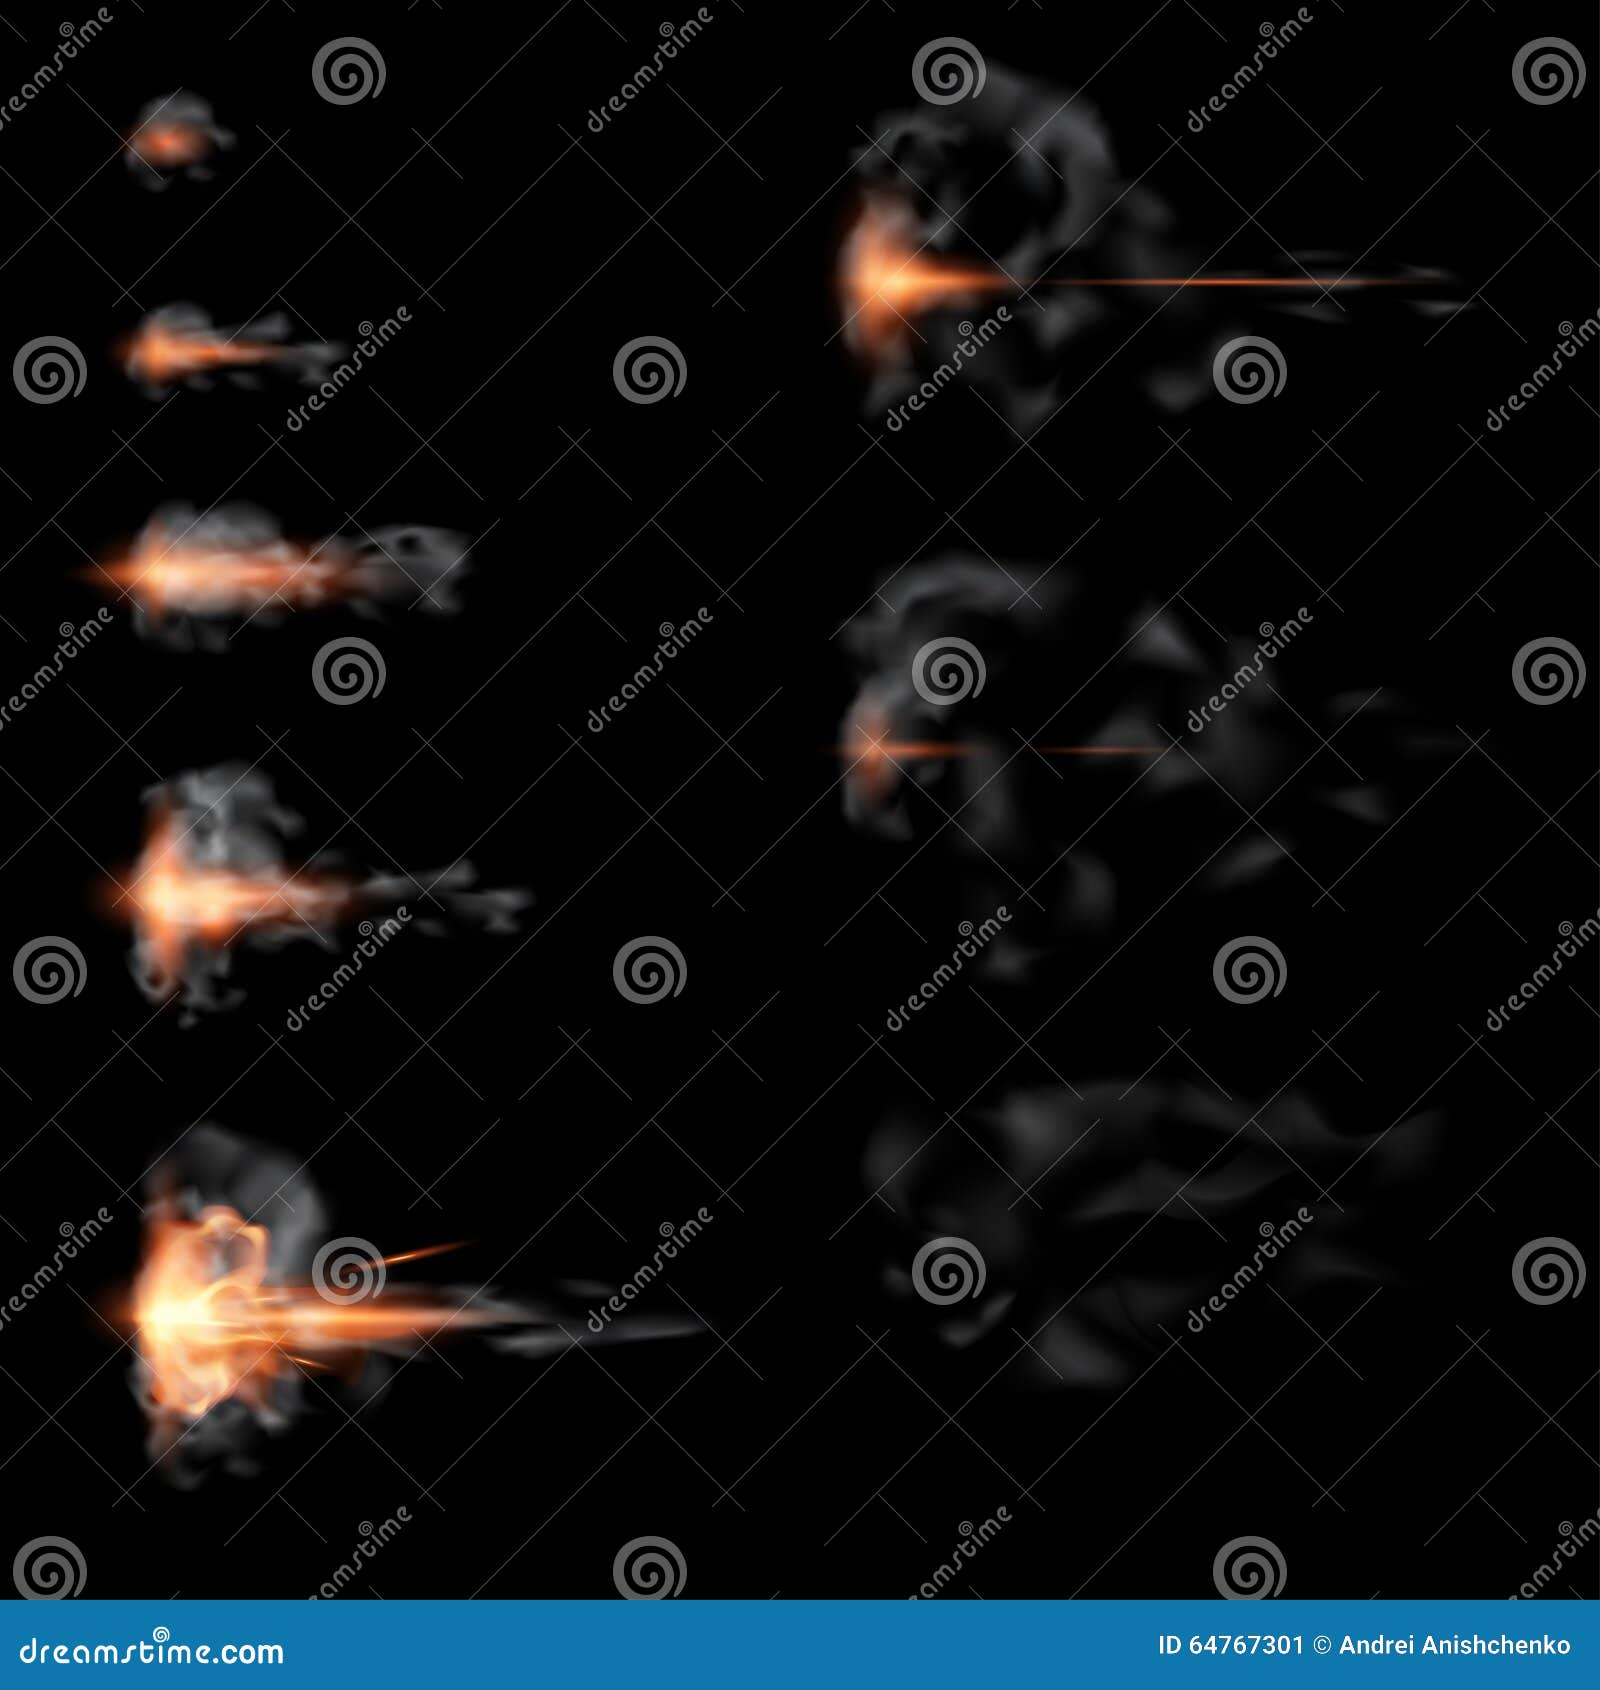 Gunshot animation stock vector. Illustration of flash - 64767301